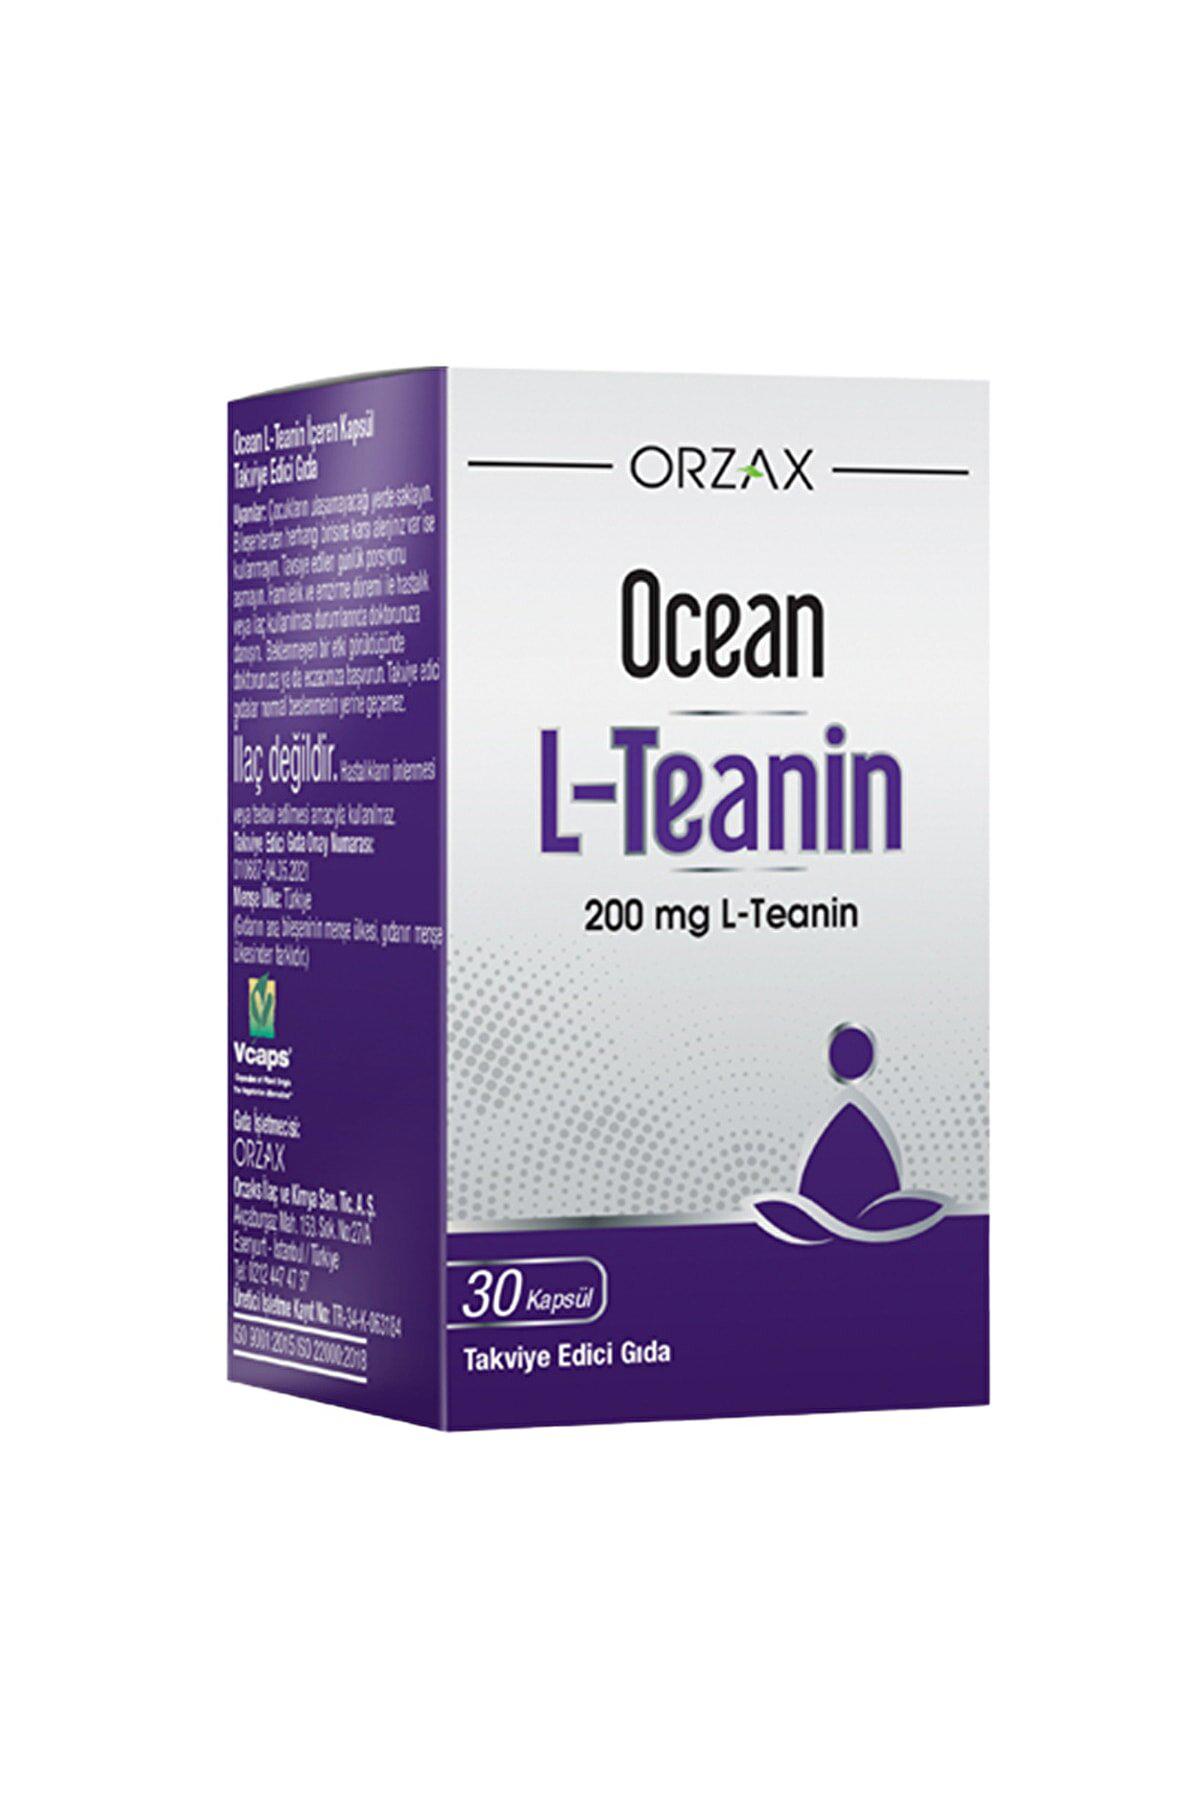 Ocean Orzax L-Teanin Aromasız Unisex Vitamin 30 Kapsül